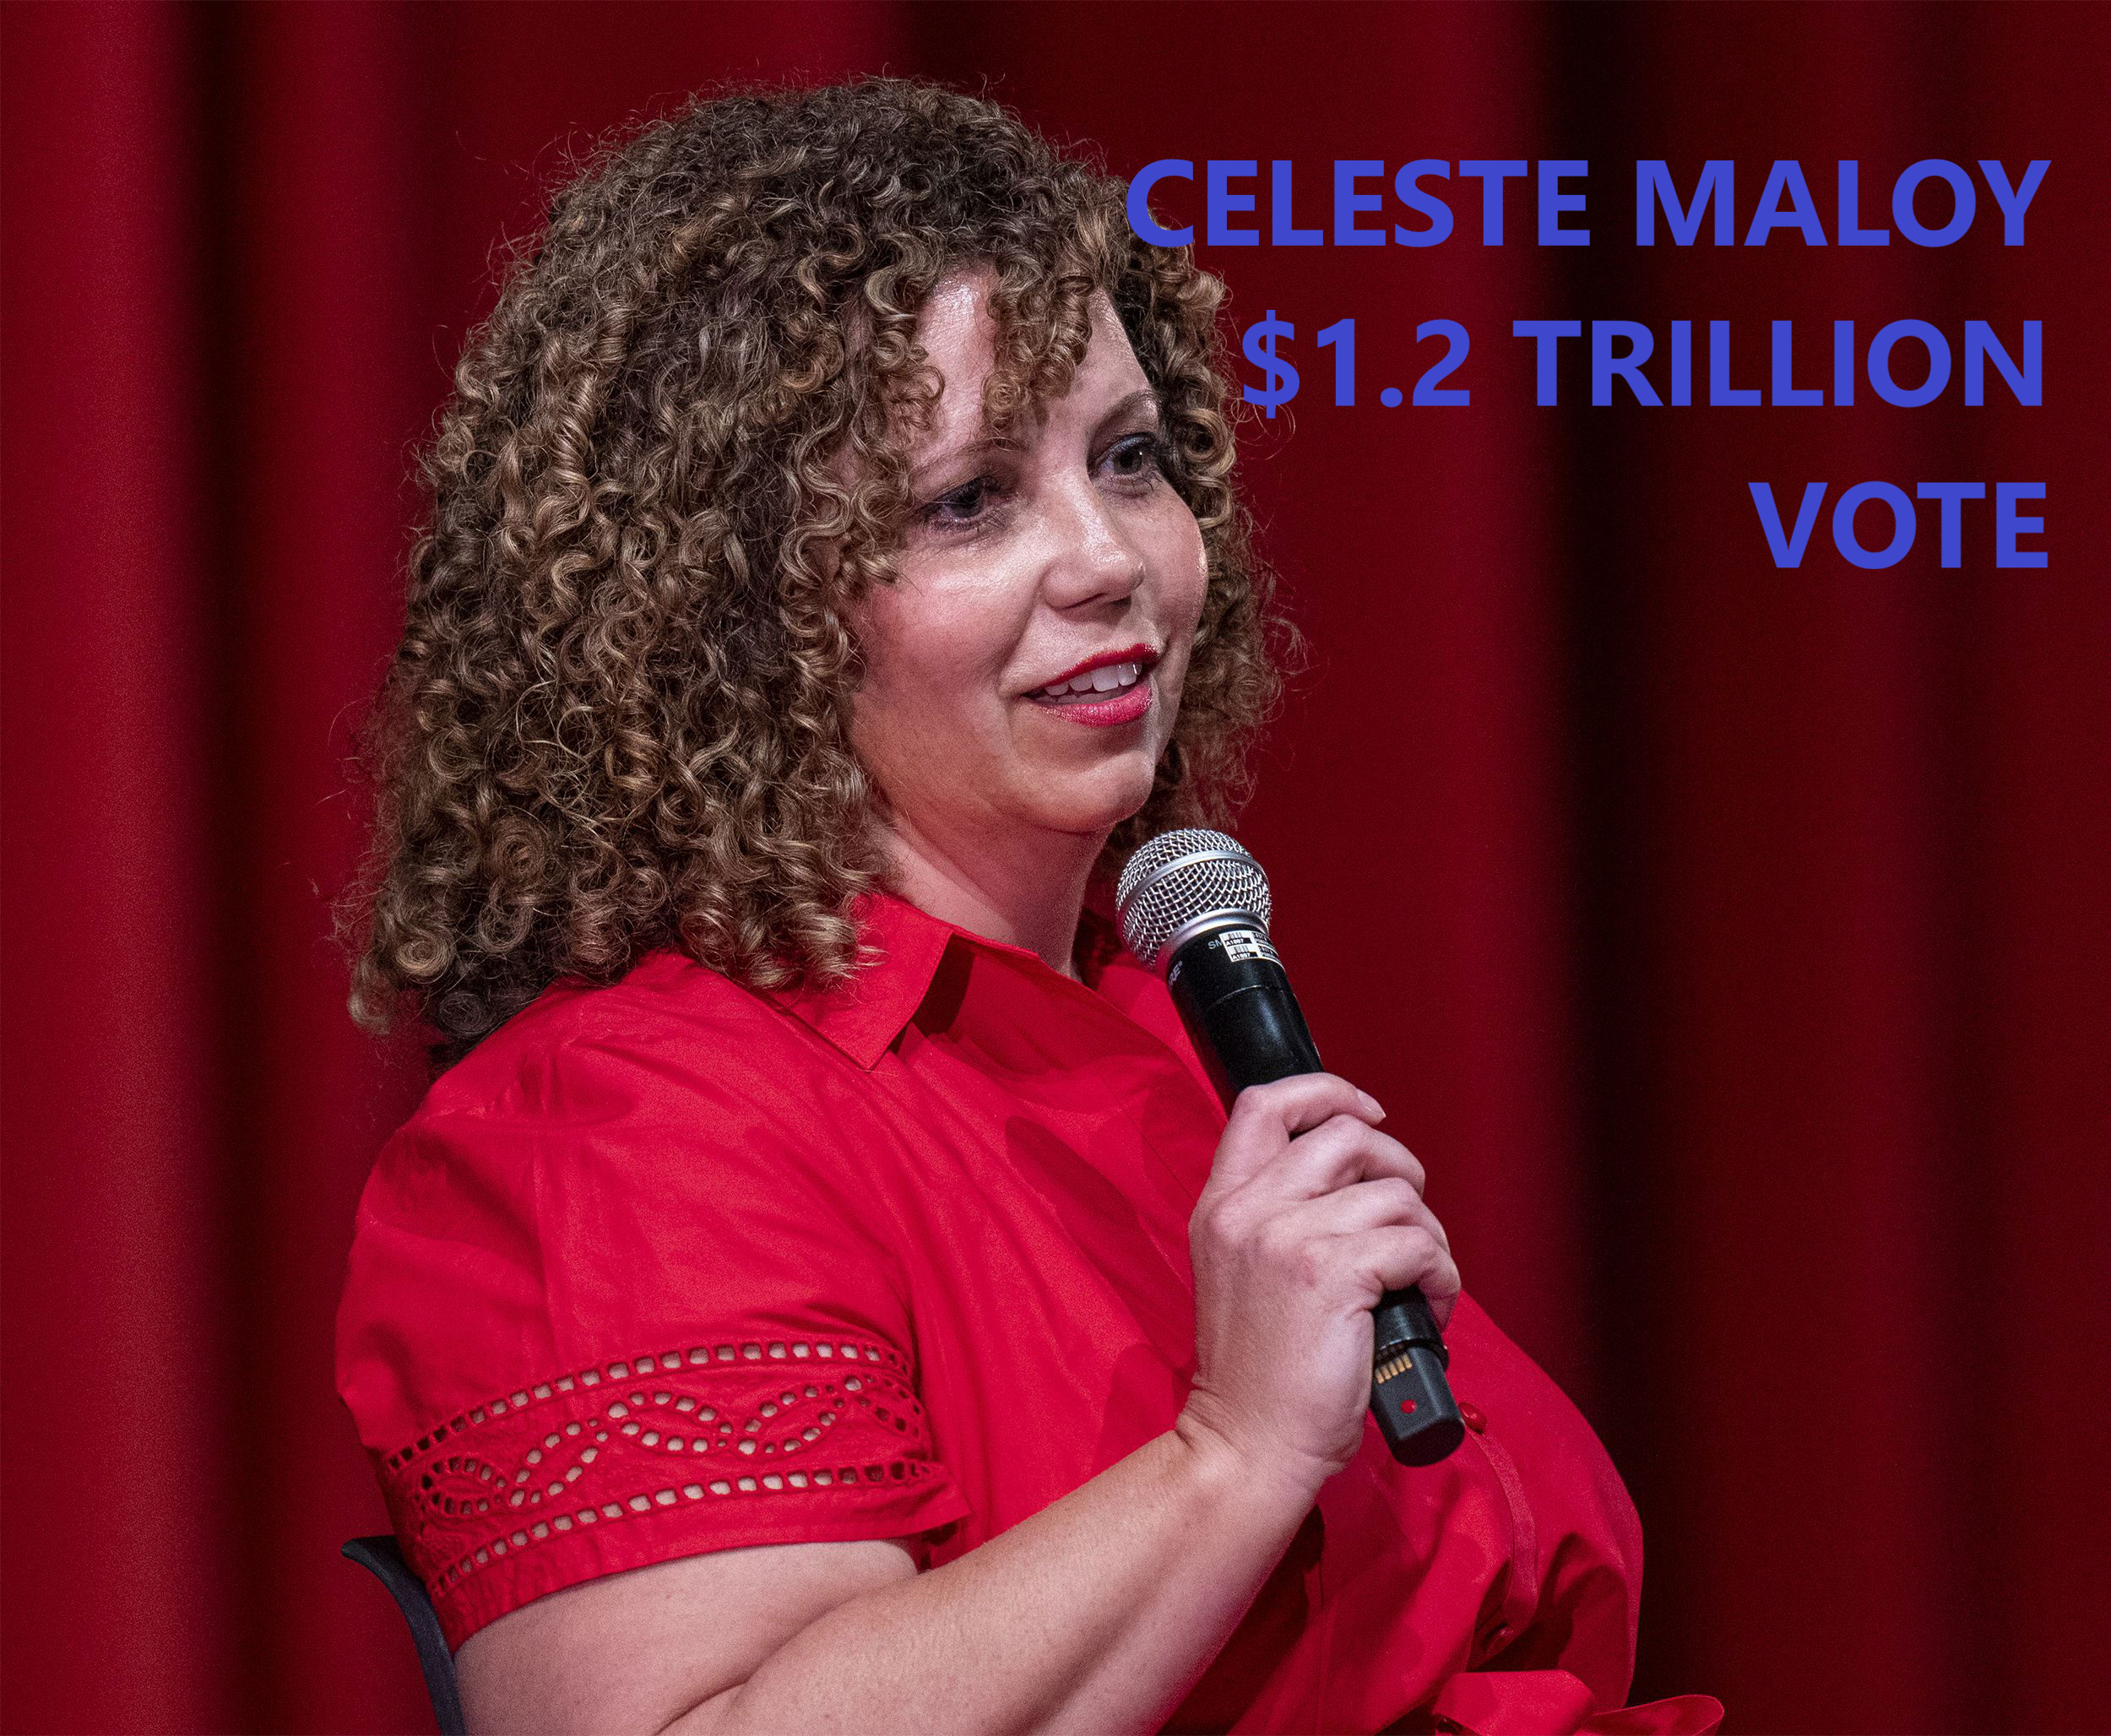 Celeste Maloy discussing vote